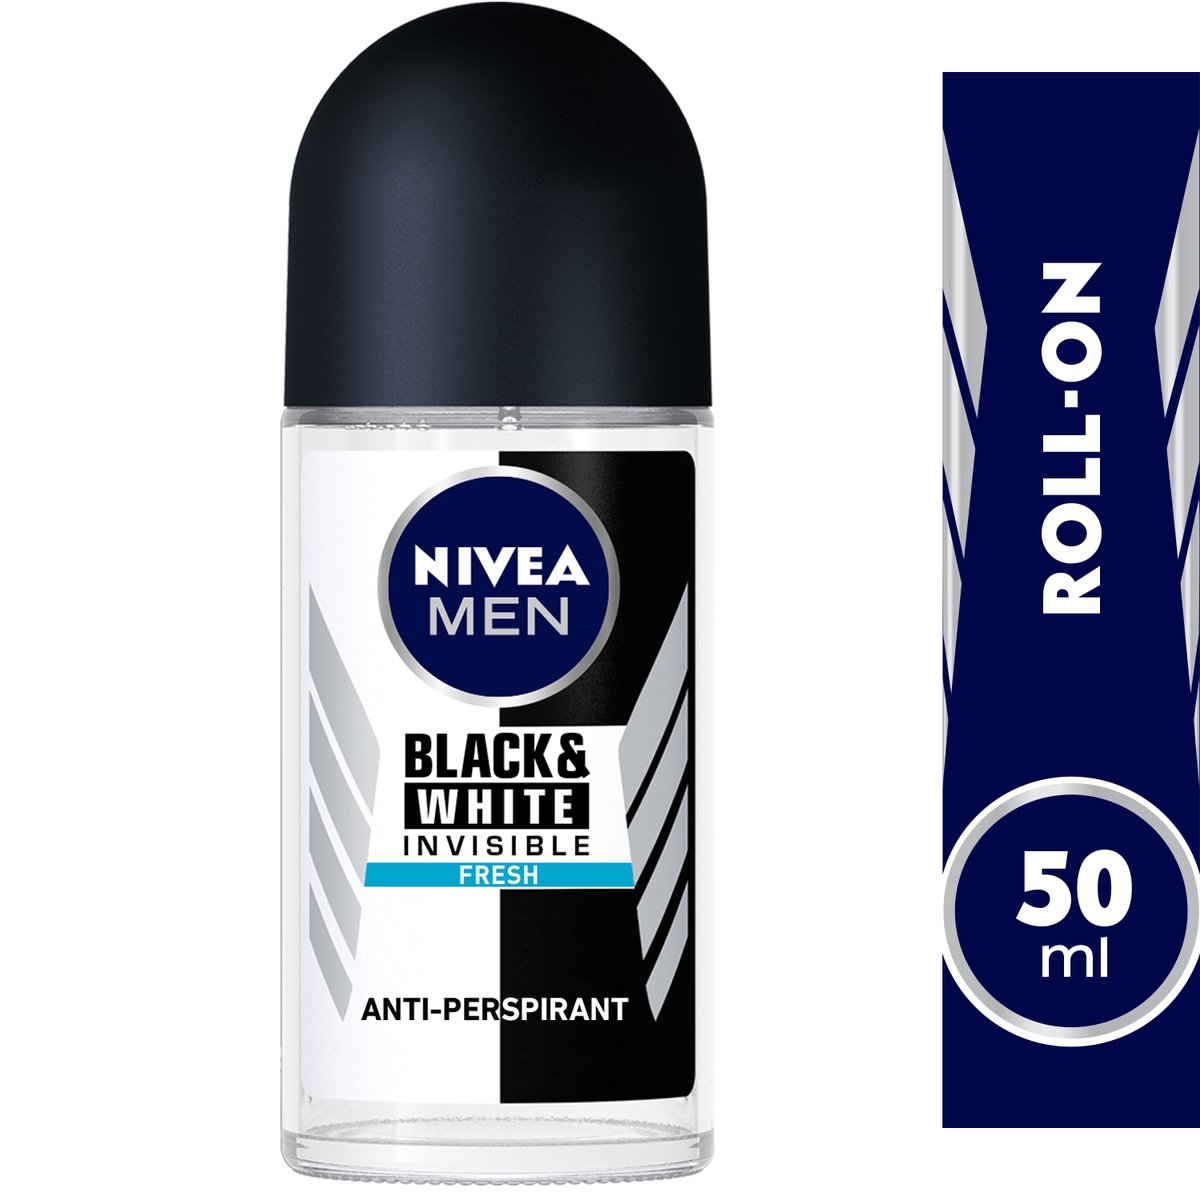 Nivea Men Black & White Invisible Deodorant Fresh 50 ml